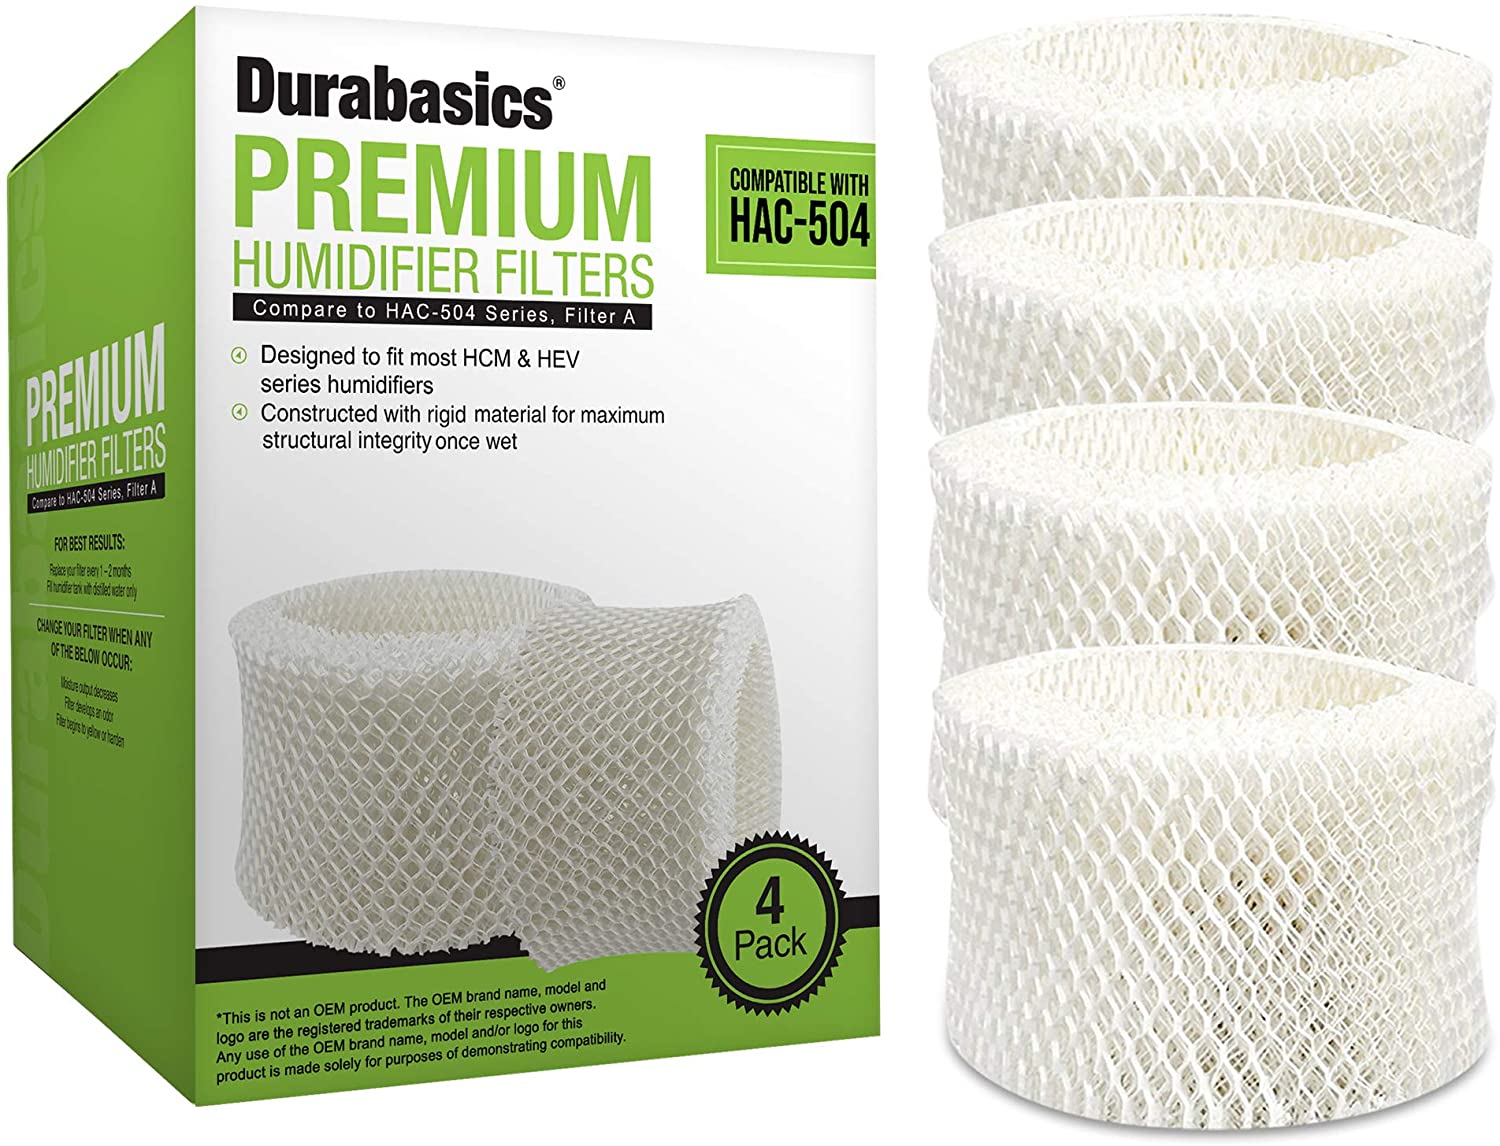 Durabasics Rigid Construction Honeywell Compatible Humidifier Filters, 4-Pack